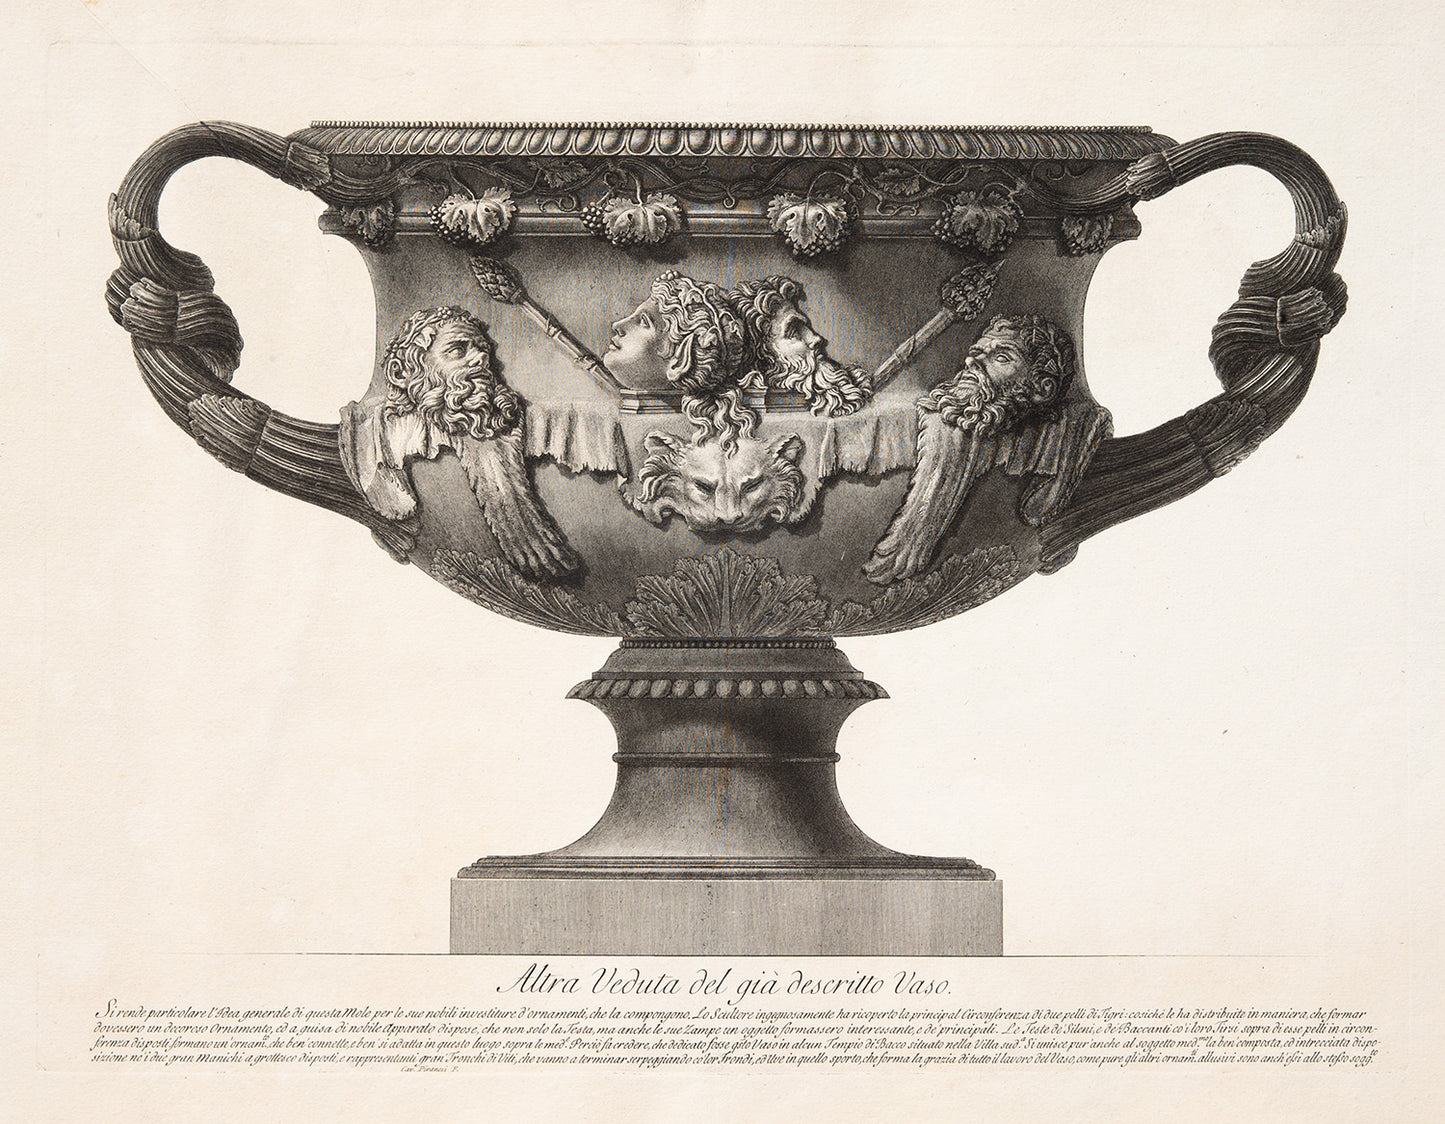 Large Vase found at the Pantanello, Hadrian's Villa, Tivoli, in 1770 (The "Warwick Vase") Front View